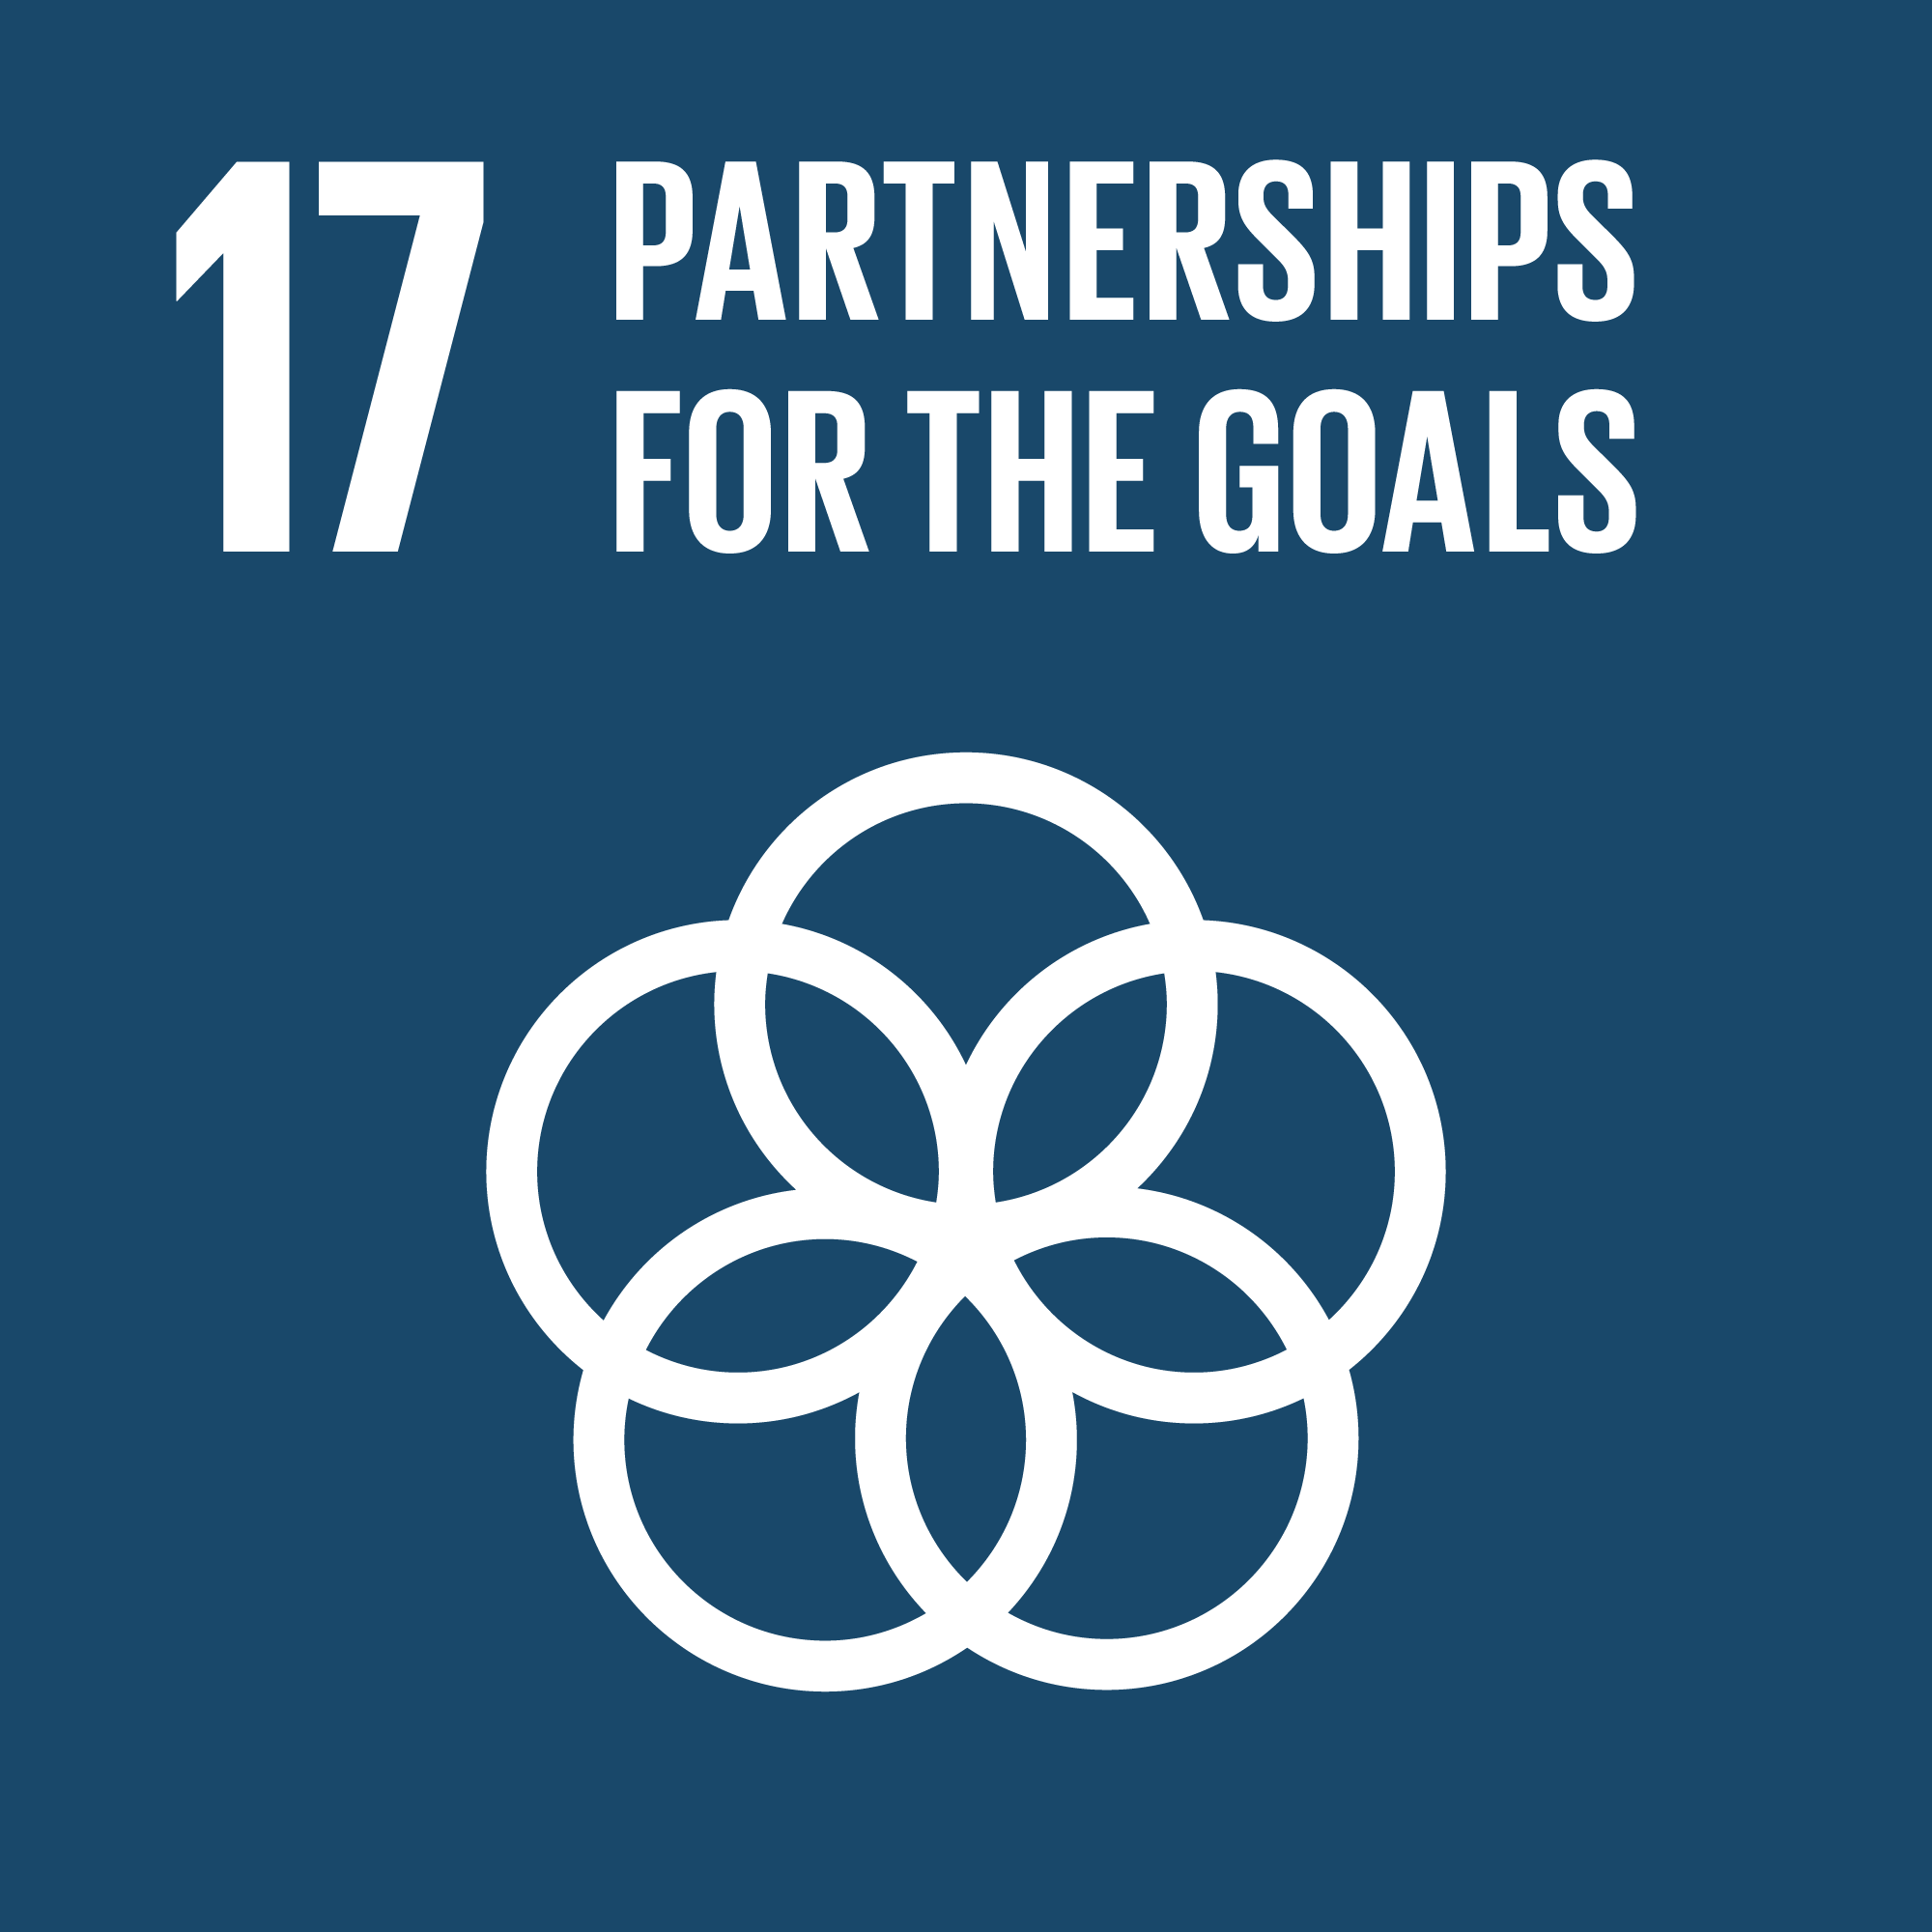 Agenda 2030 goal number 17: partnerships for the goals